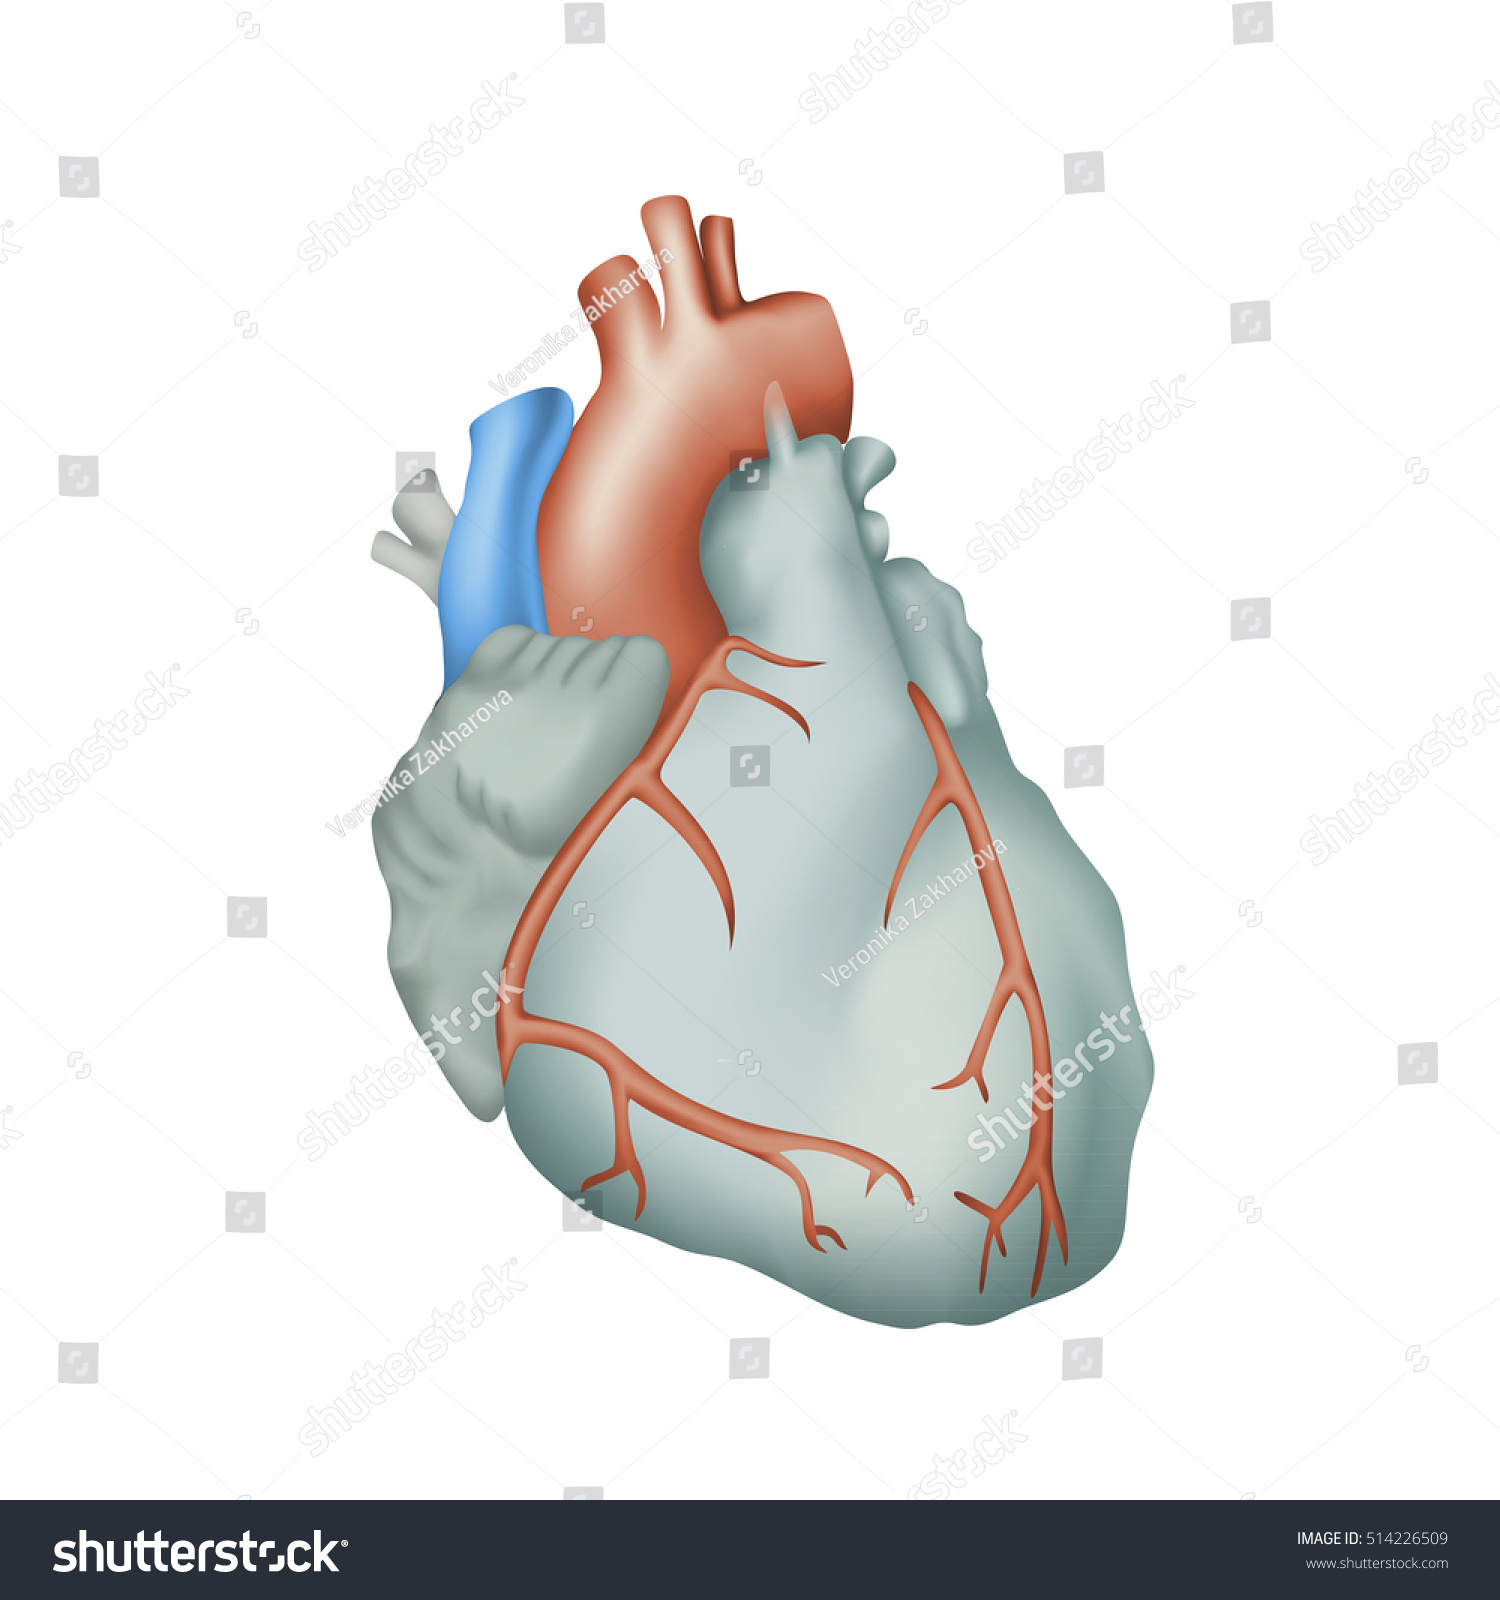 Human Heart Anatomy Illustration Colorful Image Stock Vector